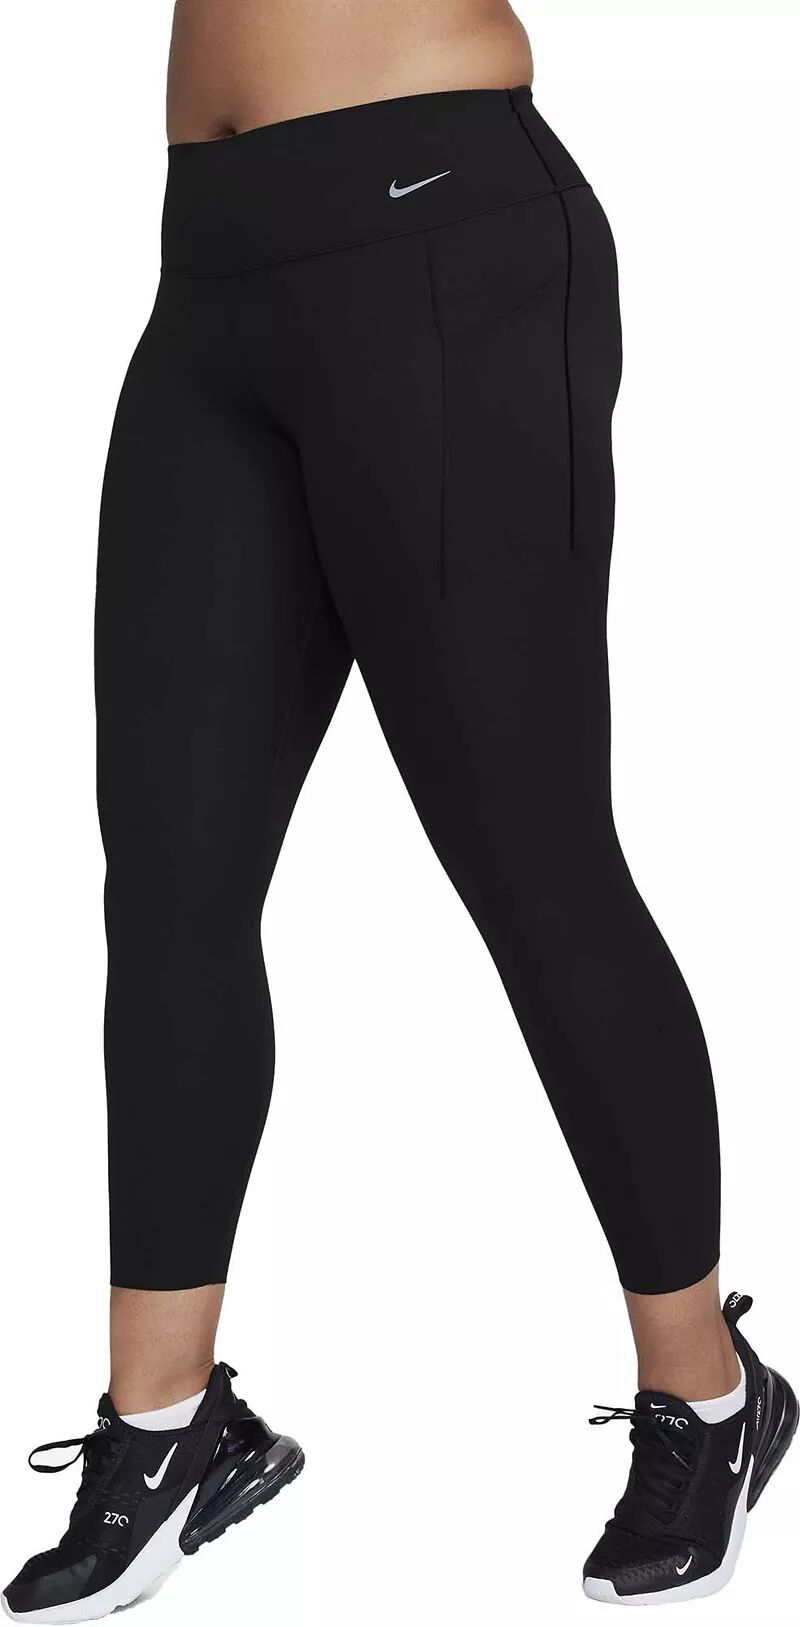 Женские леггинсы Nike Dri-FIT Universa со средней посадкой и карманами размером 7/8, черный фиолетовые леггинсы nike universa dri fit 7 8